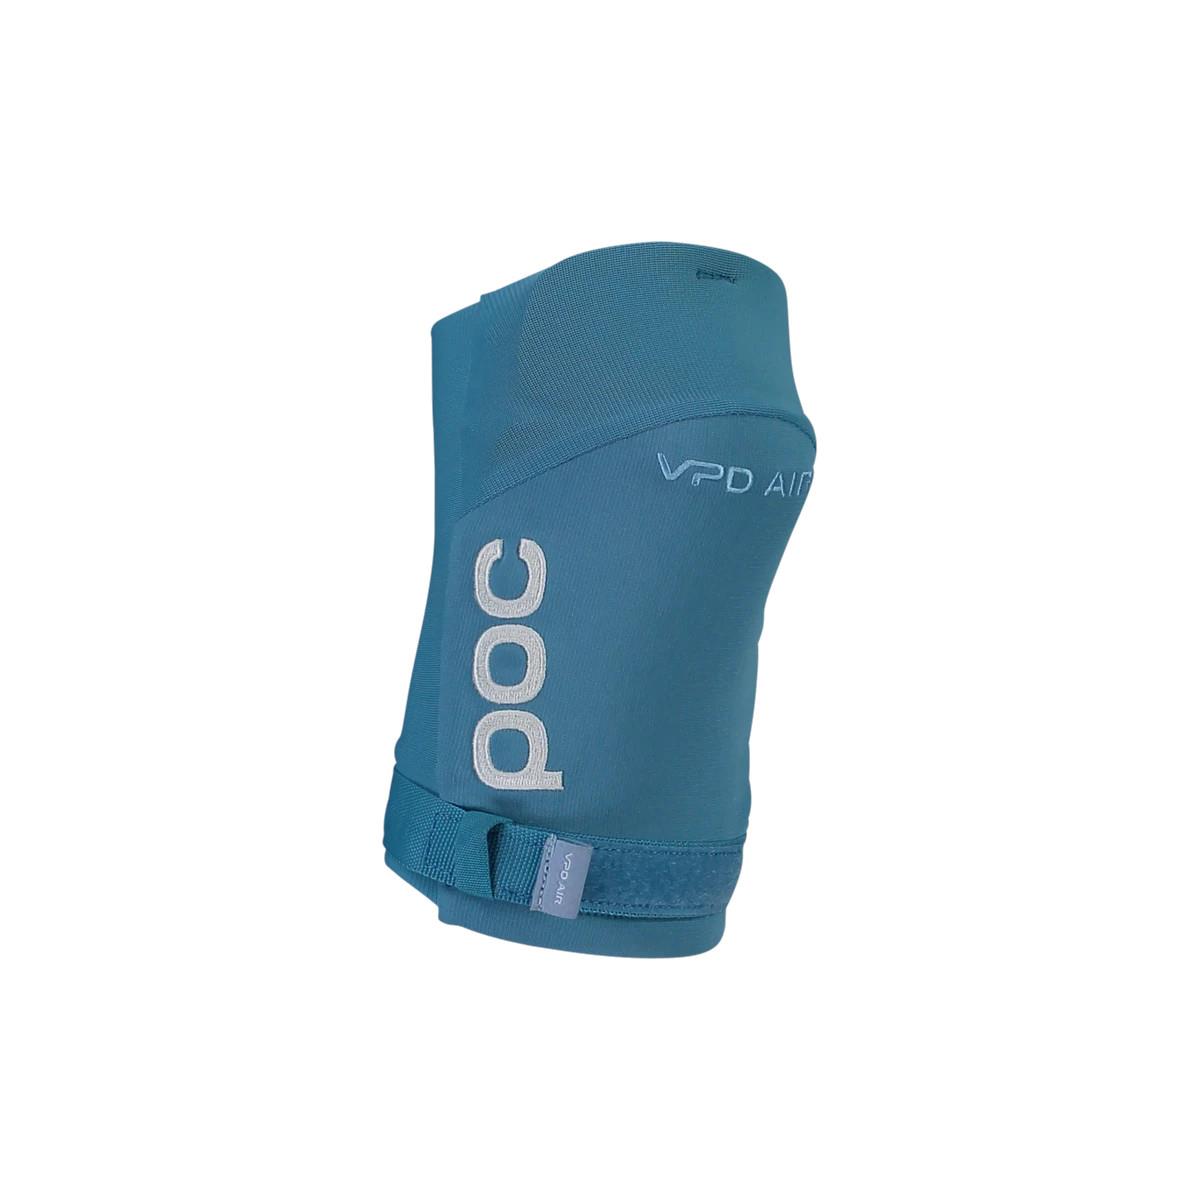 Joint VPD Air Elbow Protectors Basalt Blue Size M